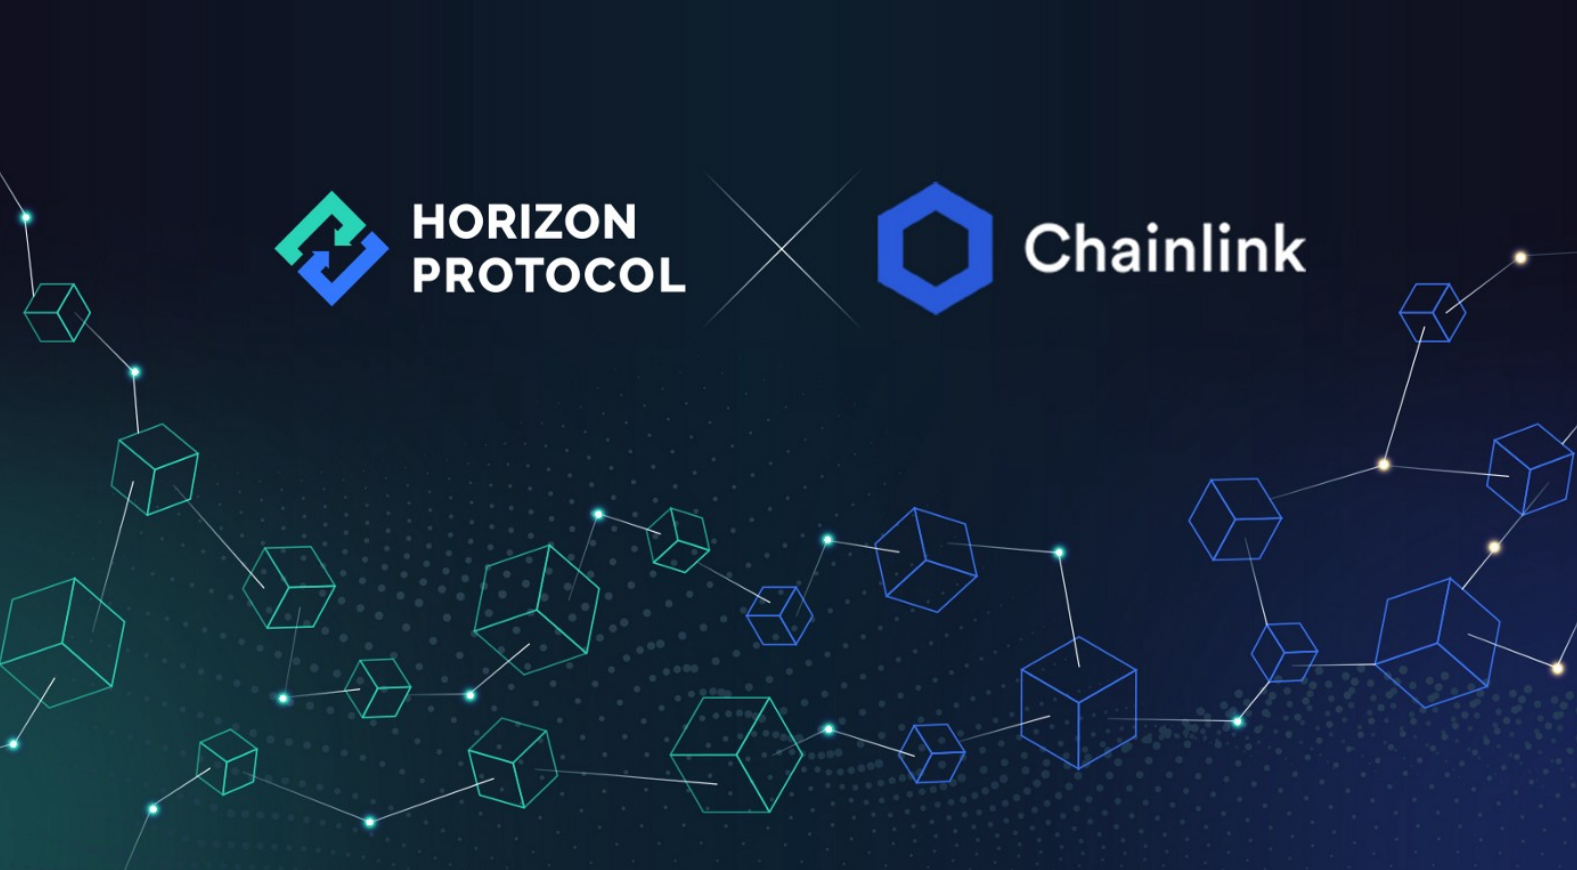 Horizon Protocol